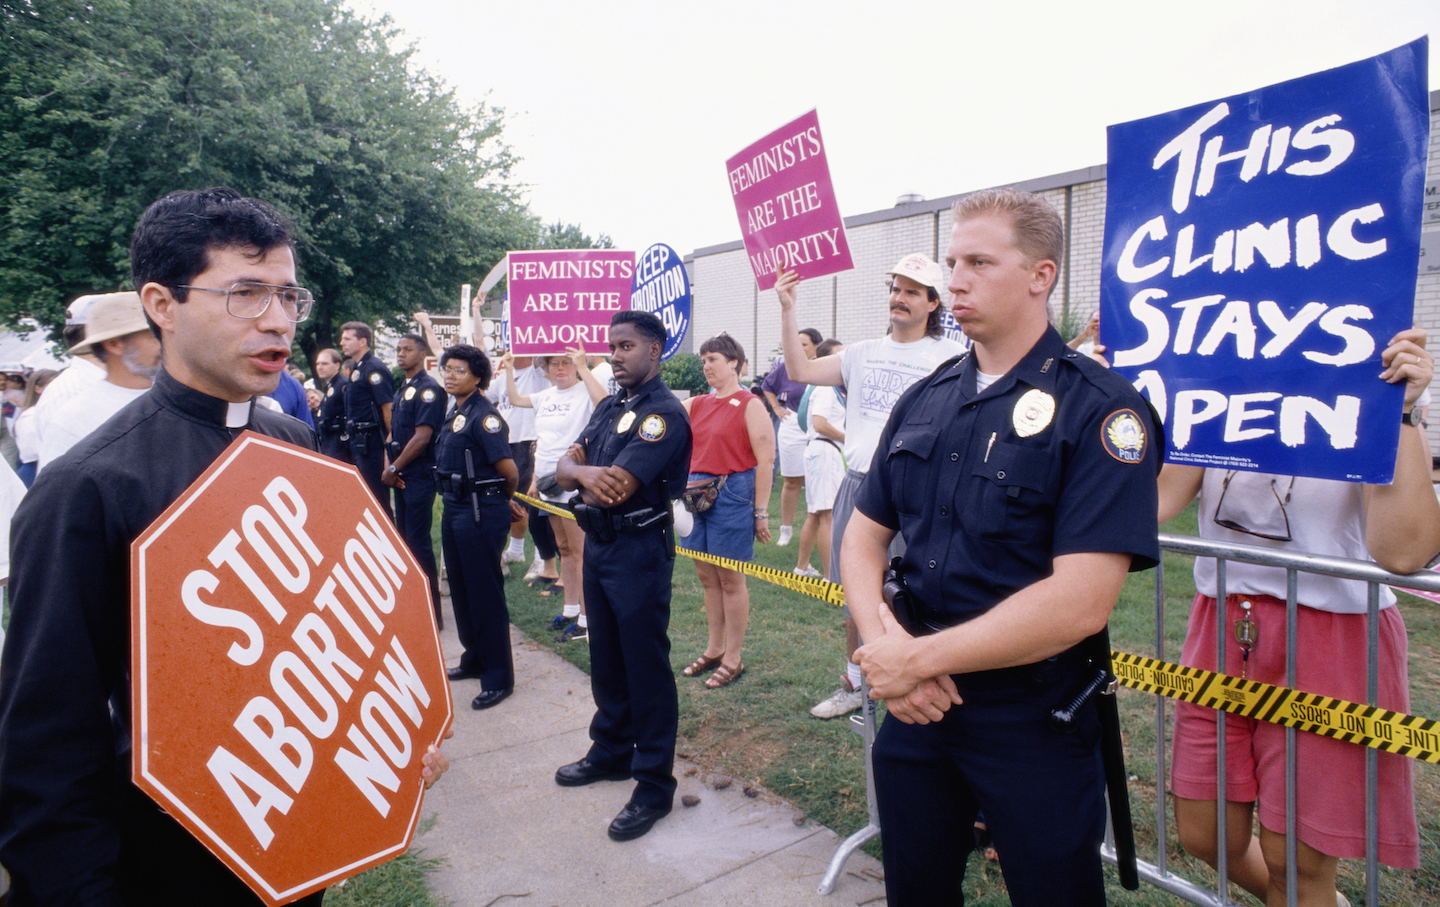 Pro-Life Demonstrators Face Pro-Choice Demonstrators